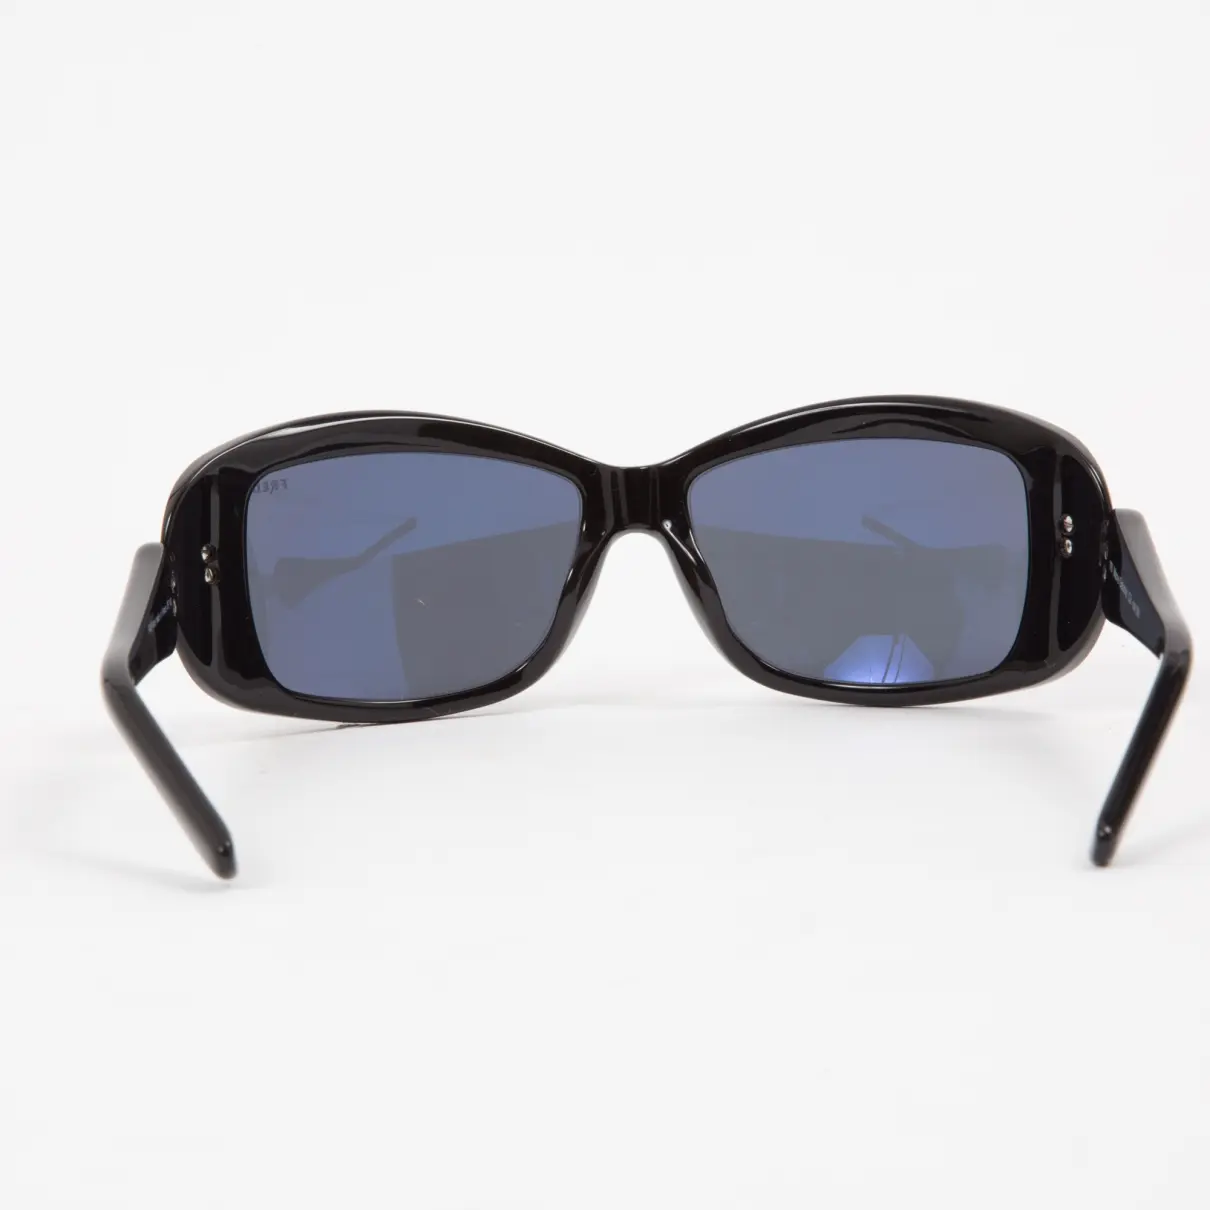 Buy Fred Sunglasses online